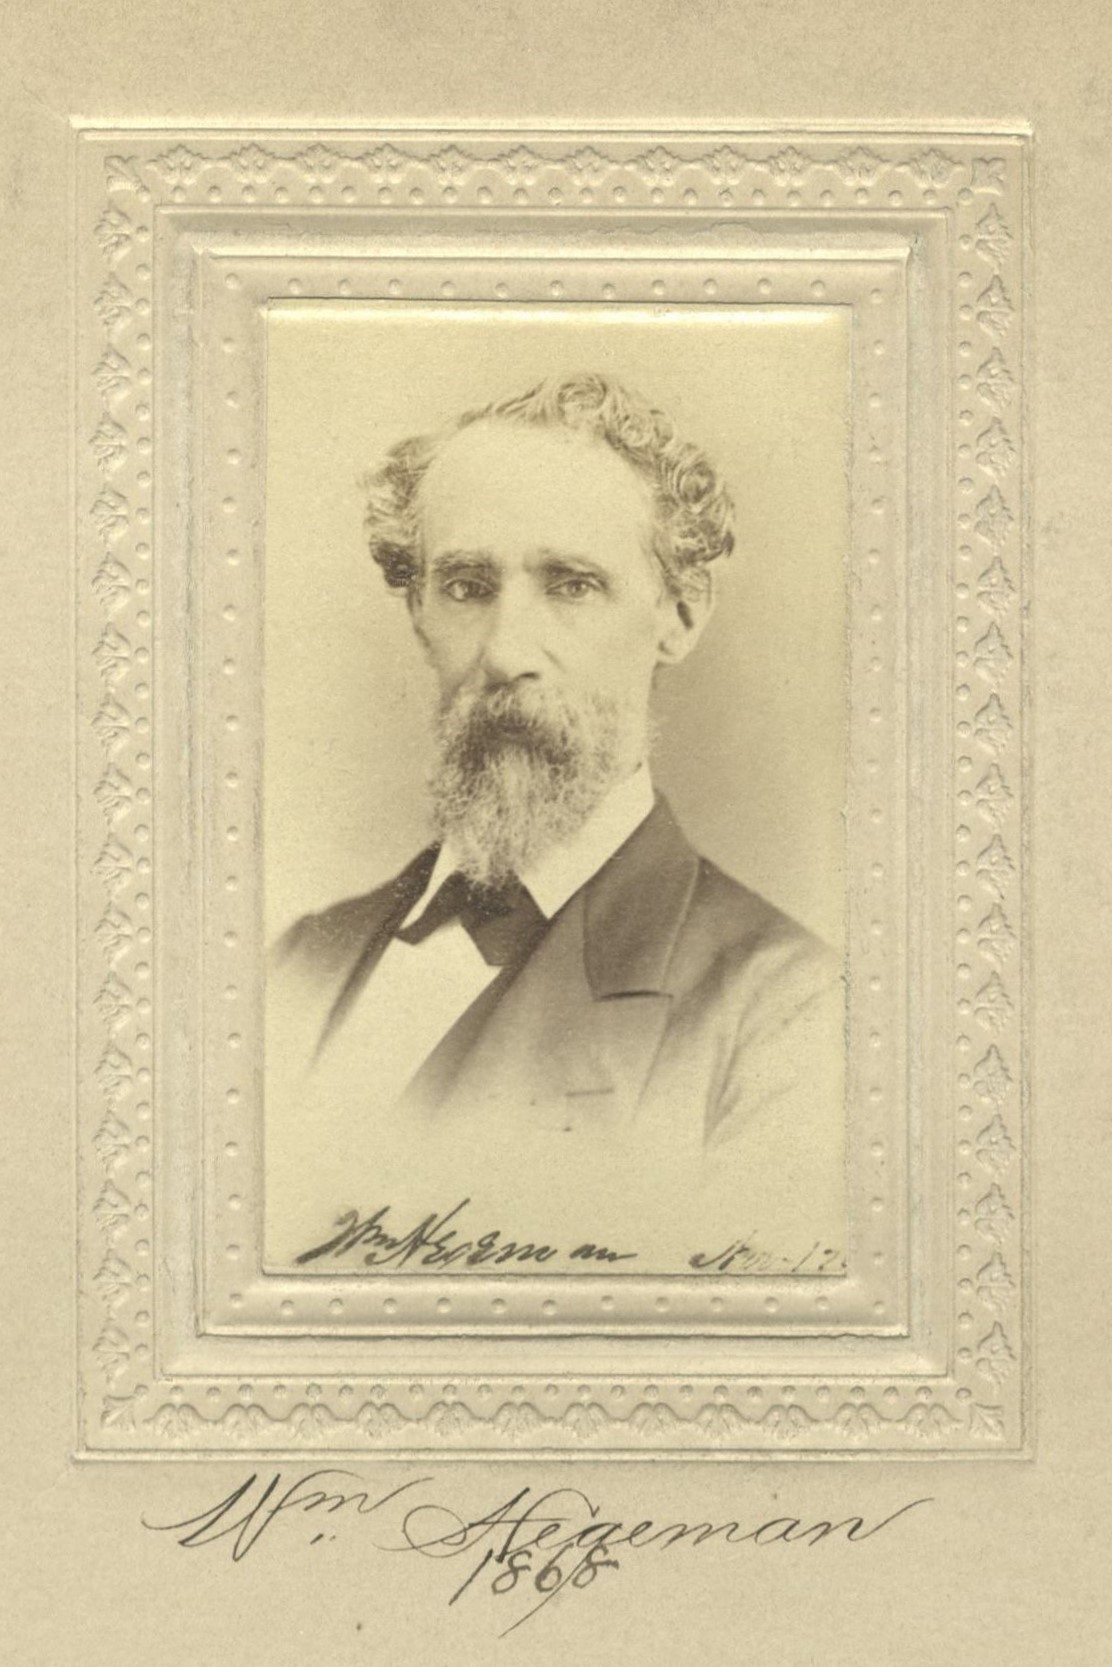 Member portrait of William Hegeman